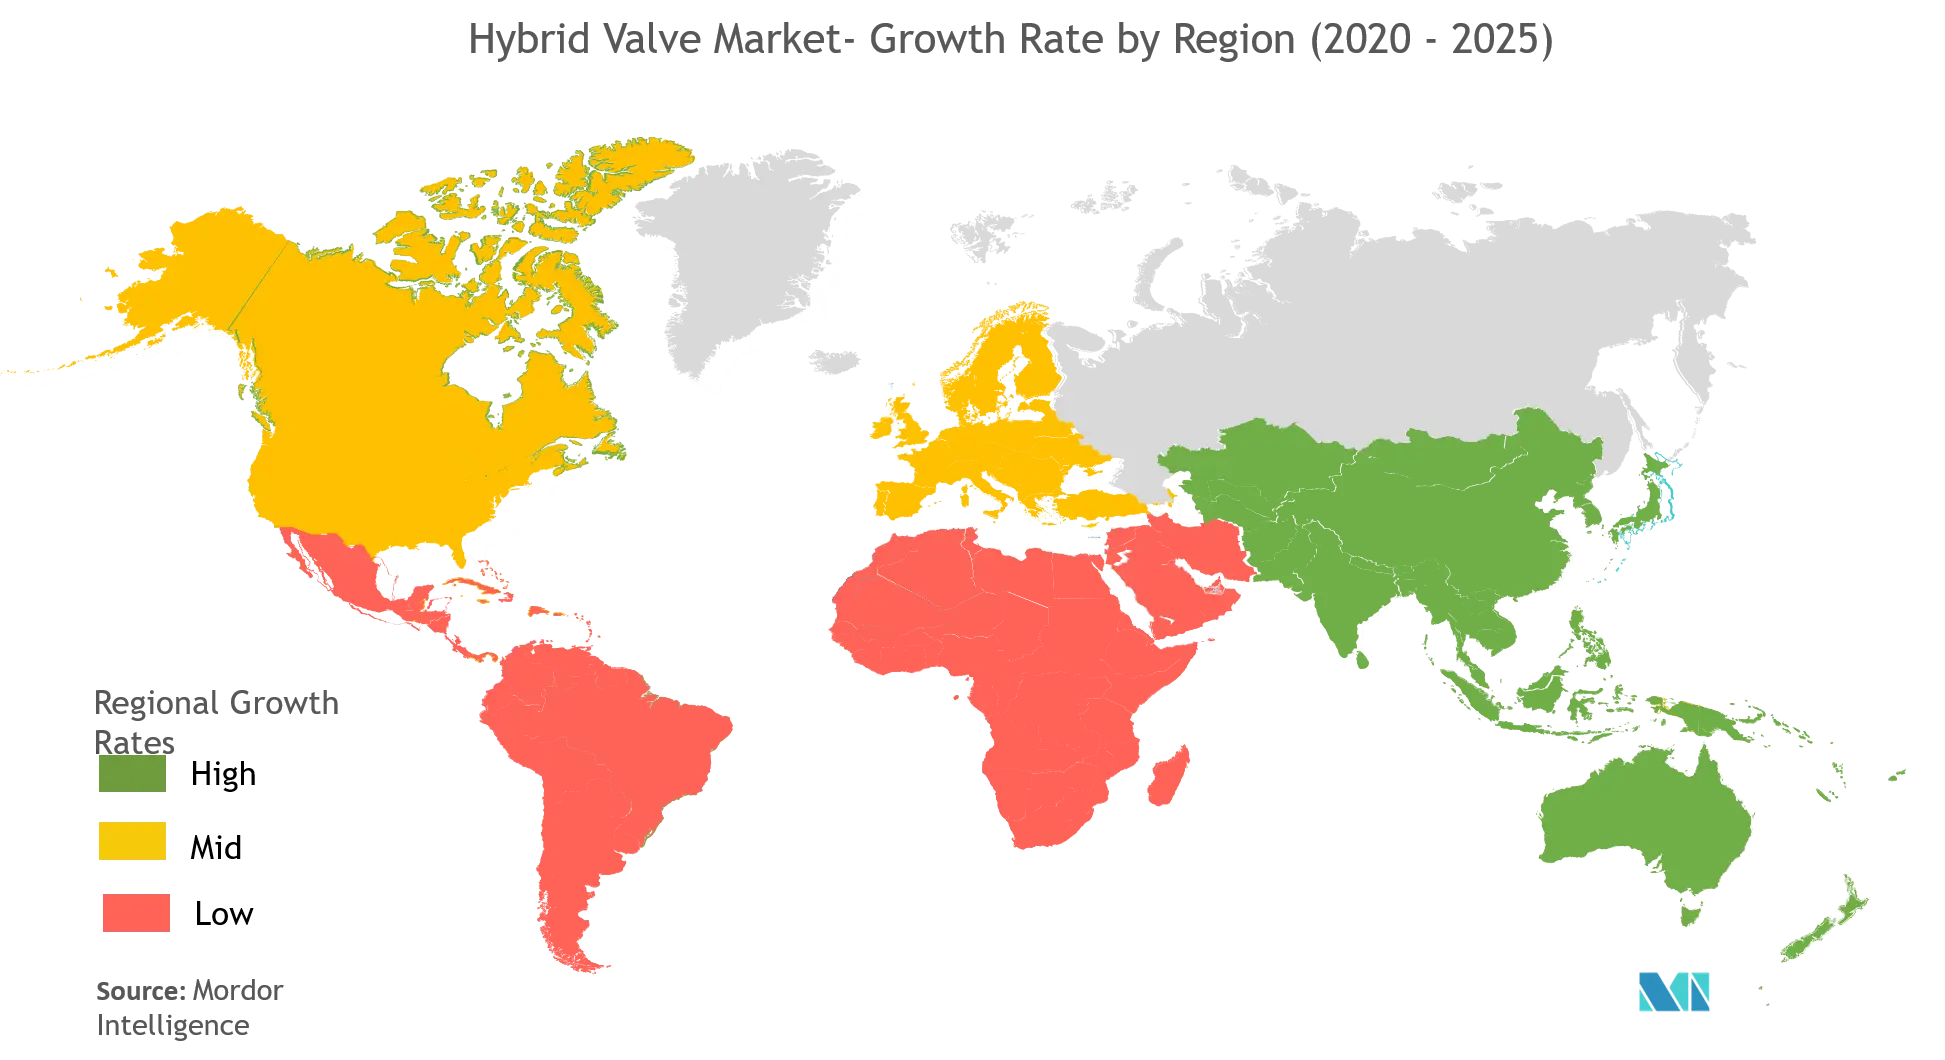 Hybrid Valve Market